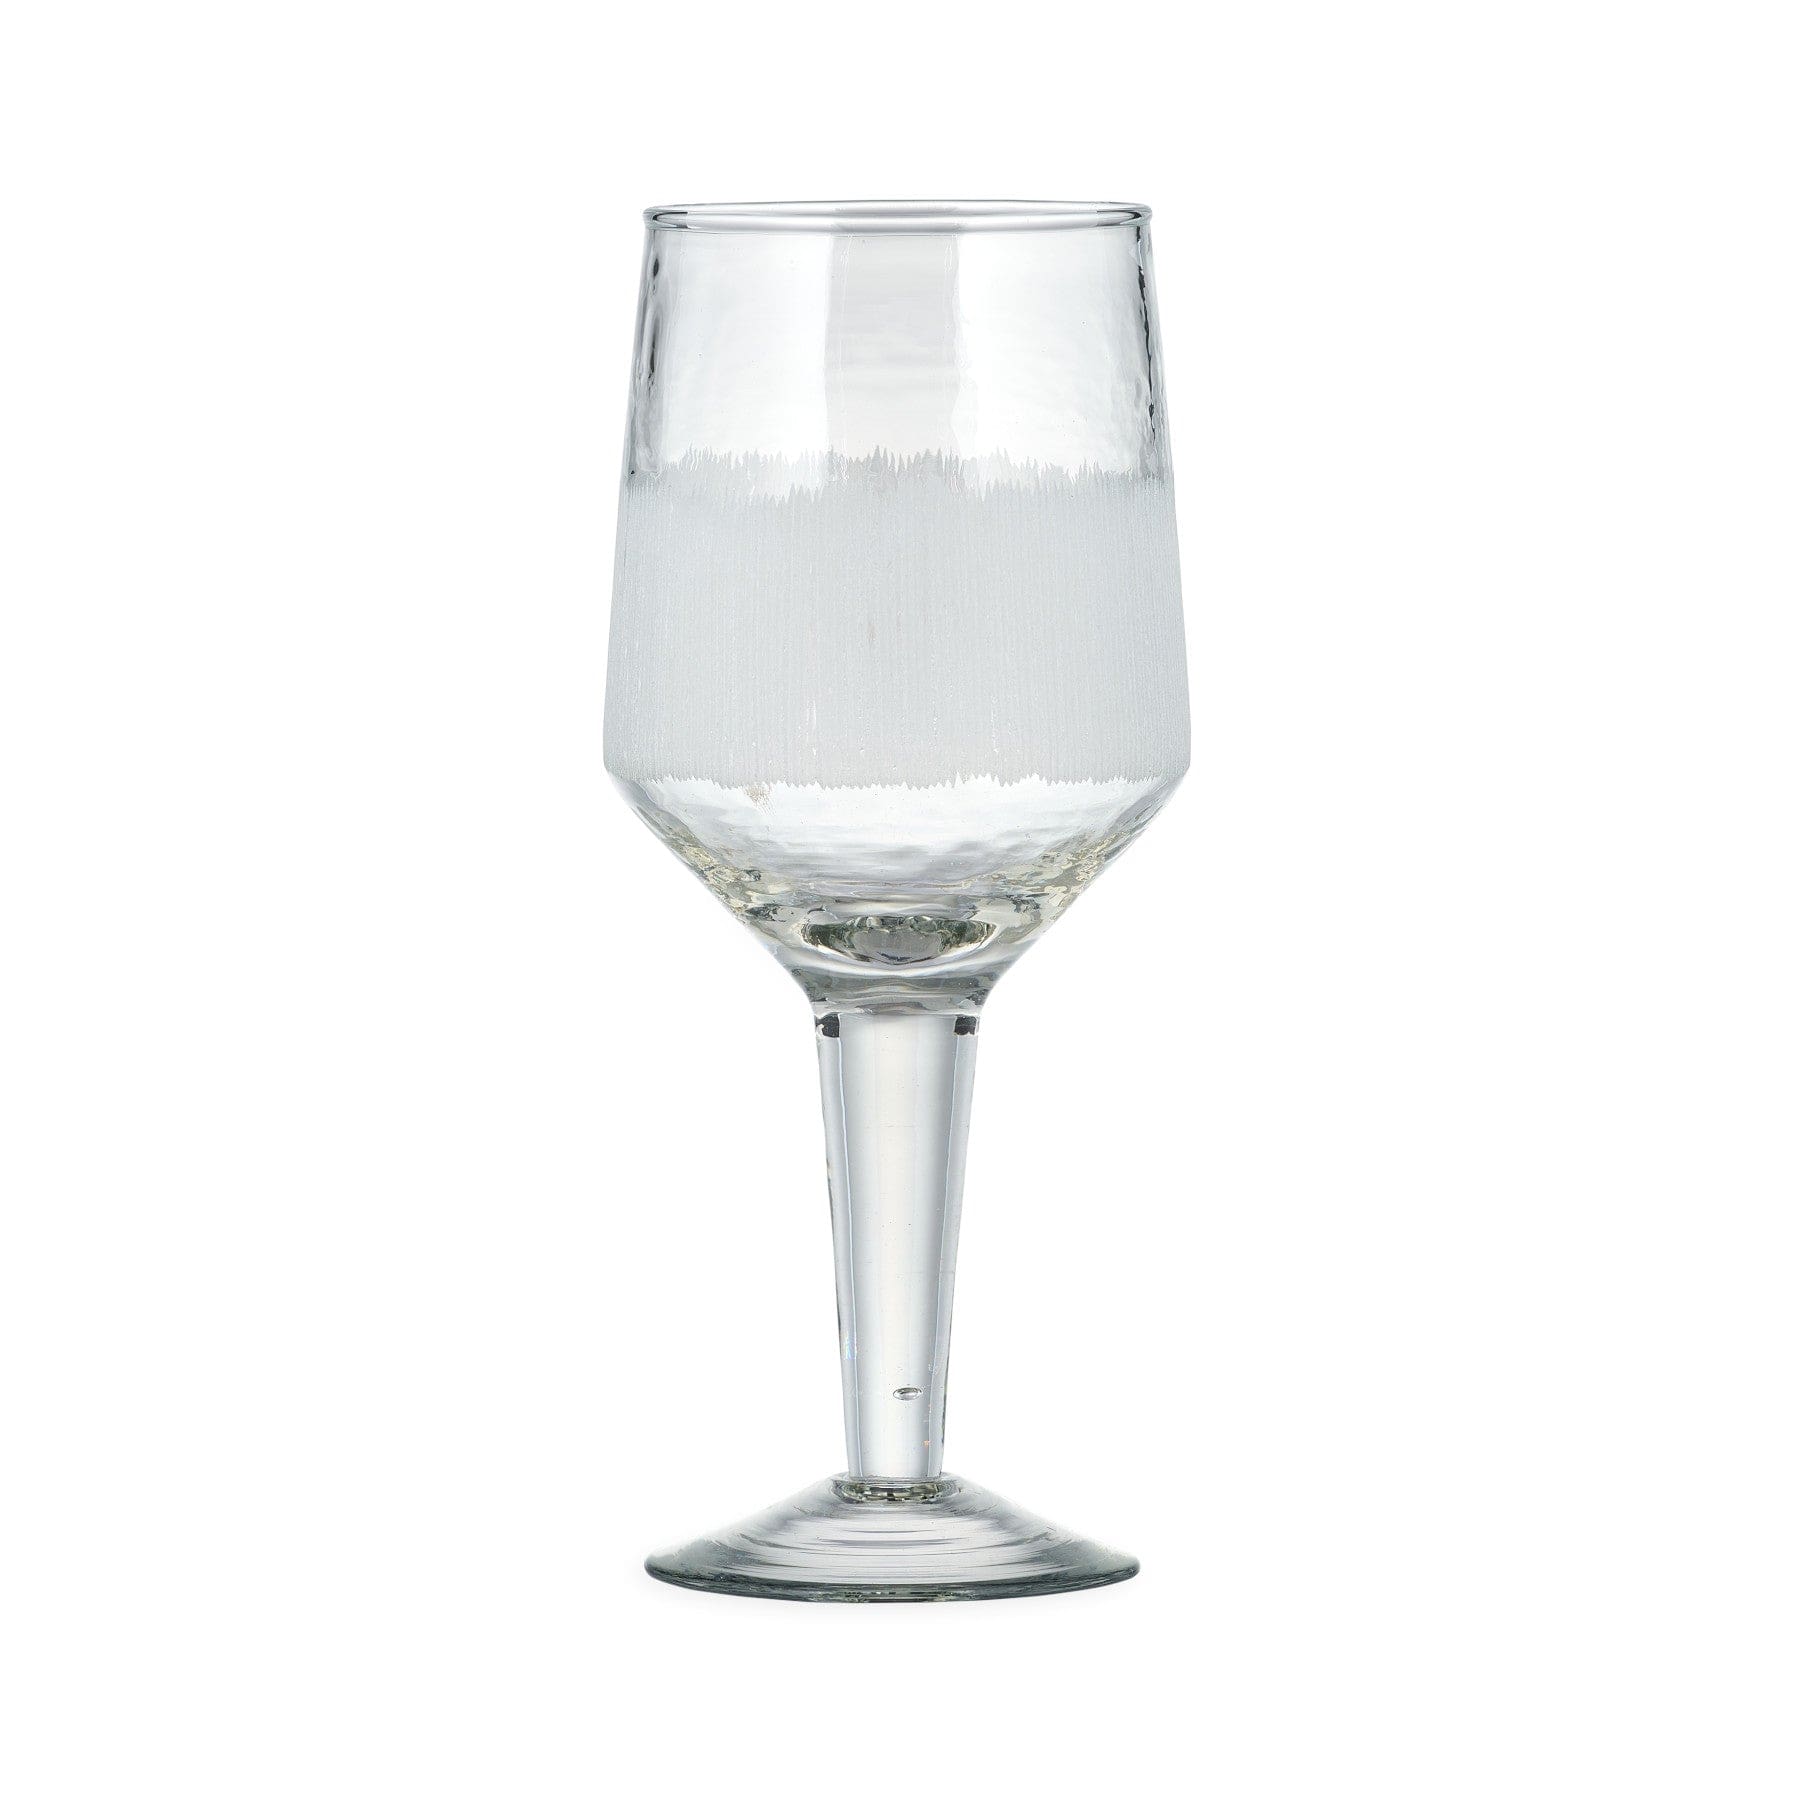 Anara etched wine glass